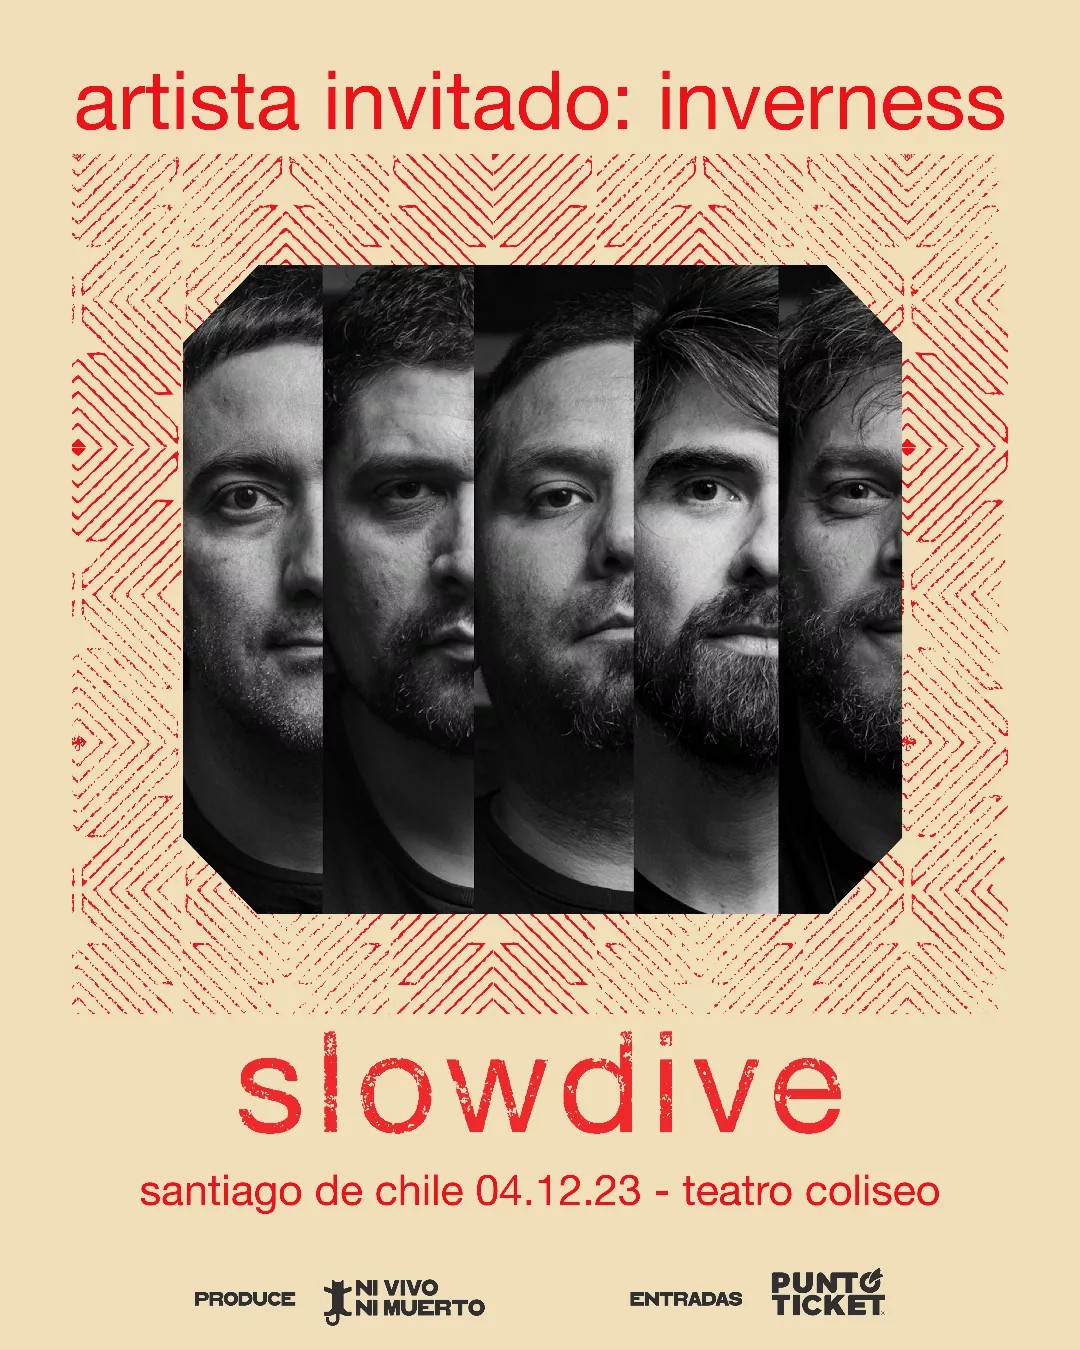 Slowdive en Chile: confirman a Inverness como grupo invitado